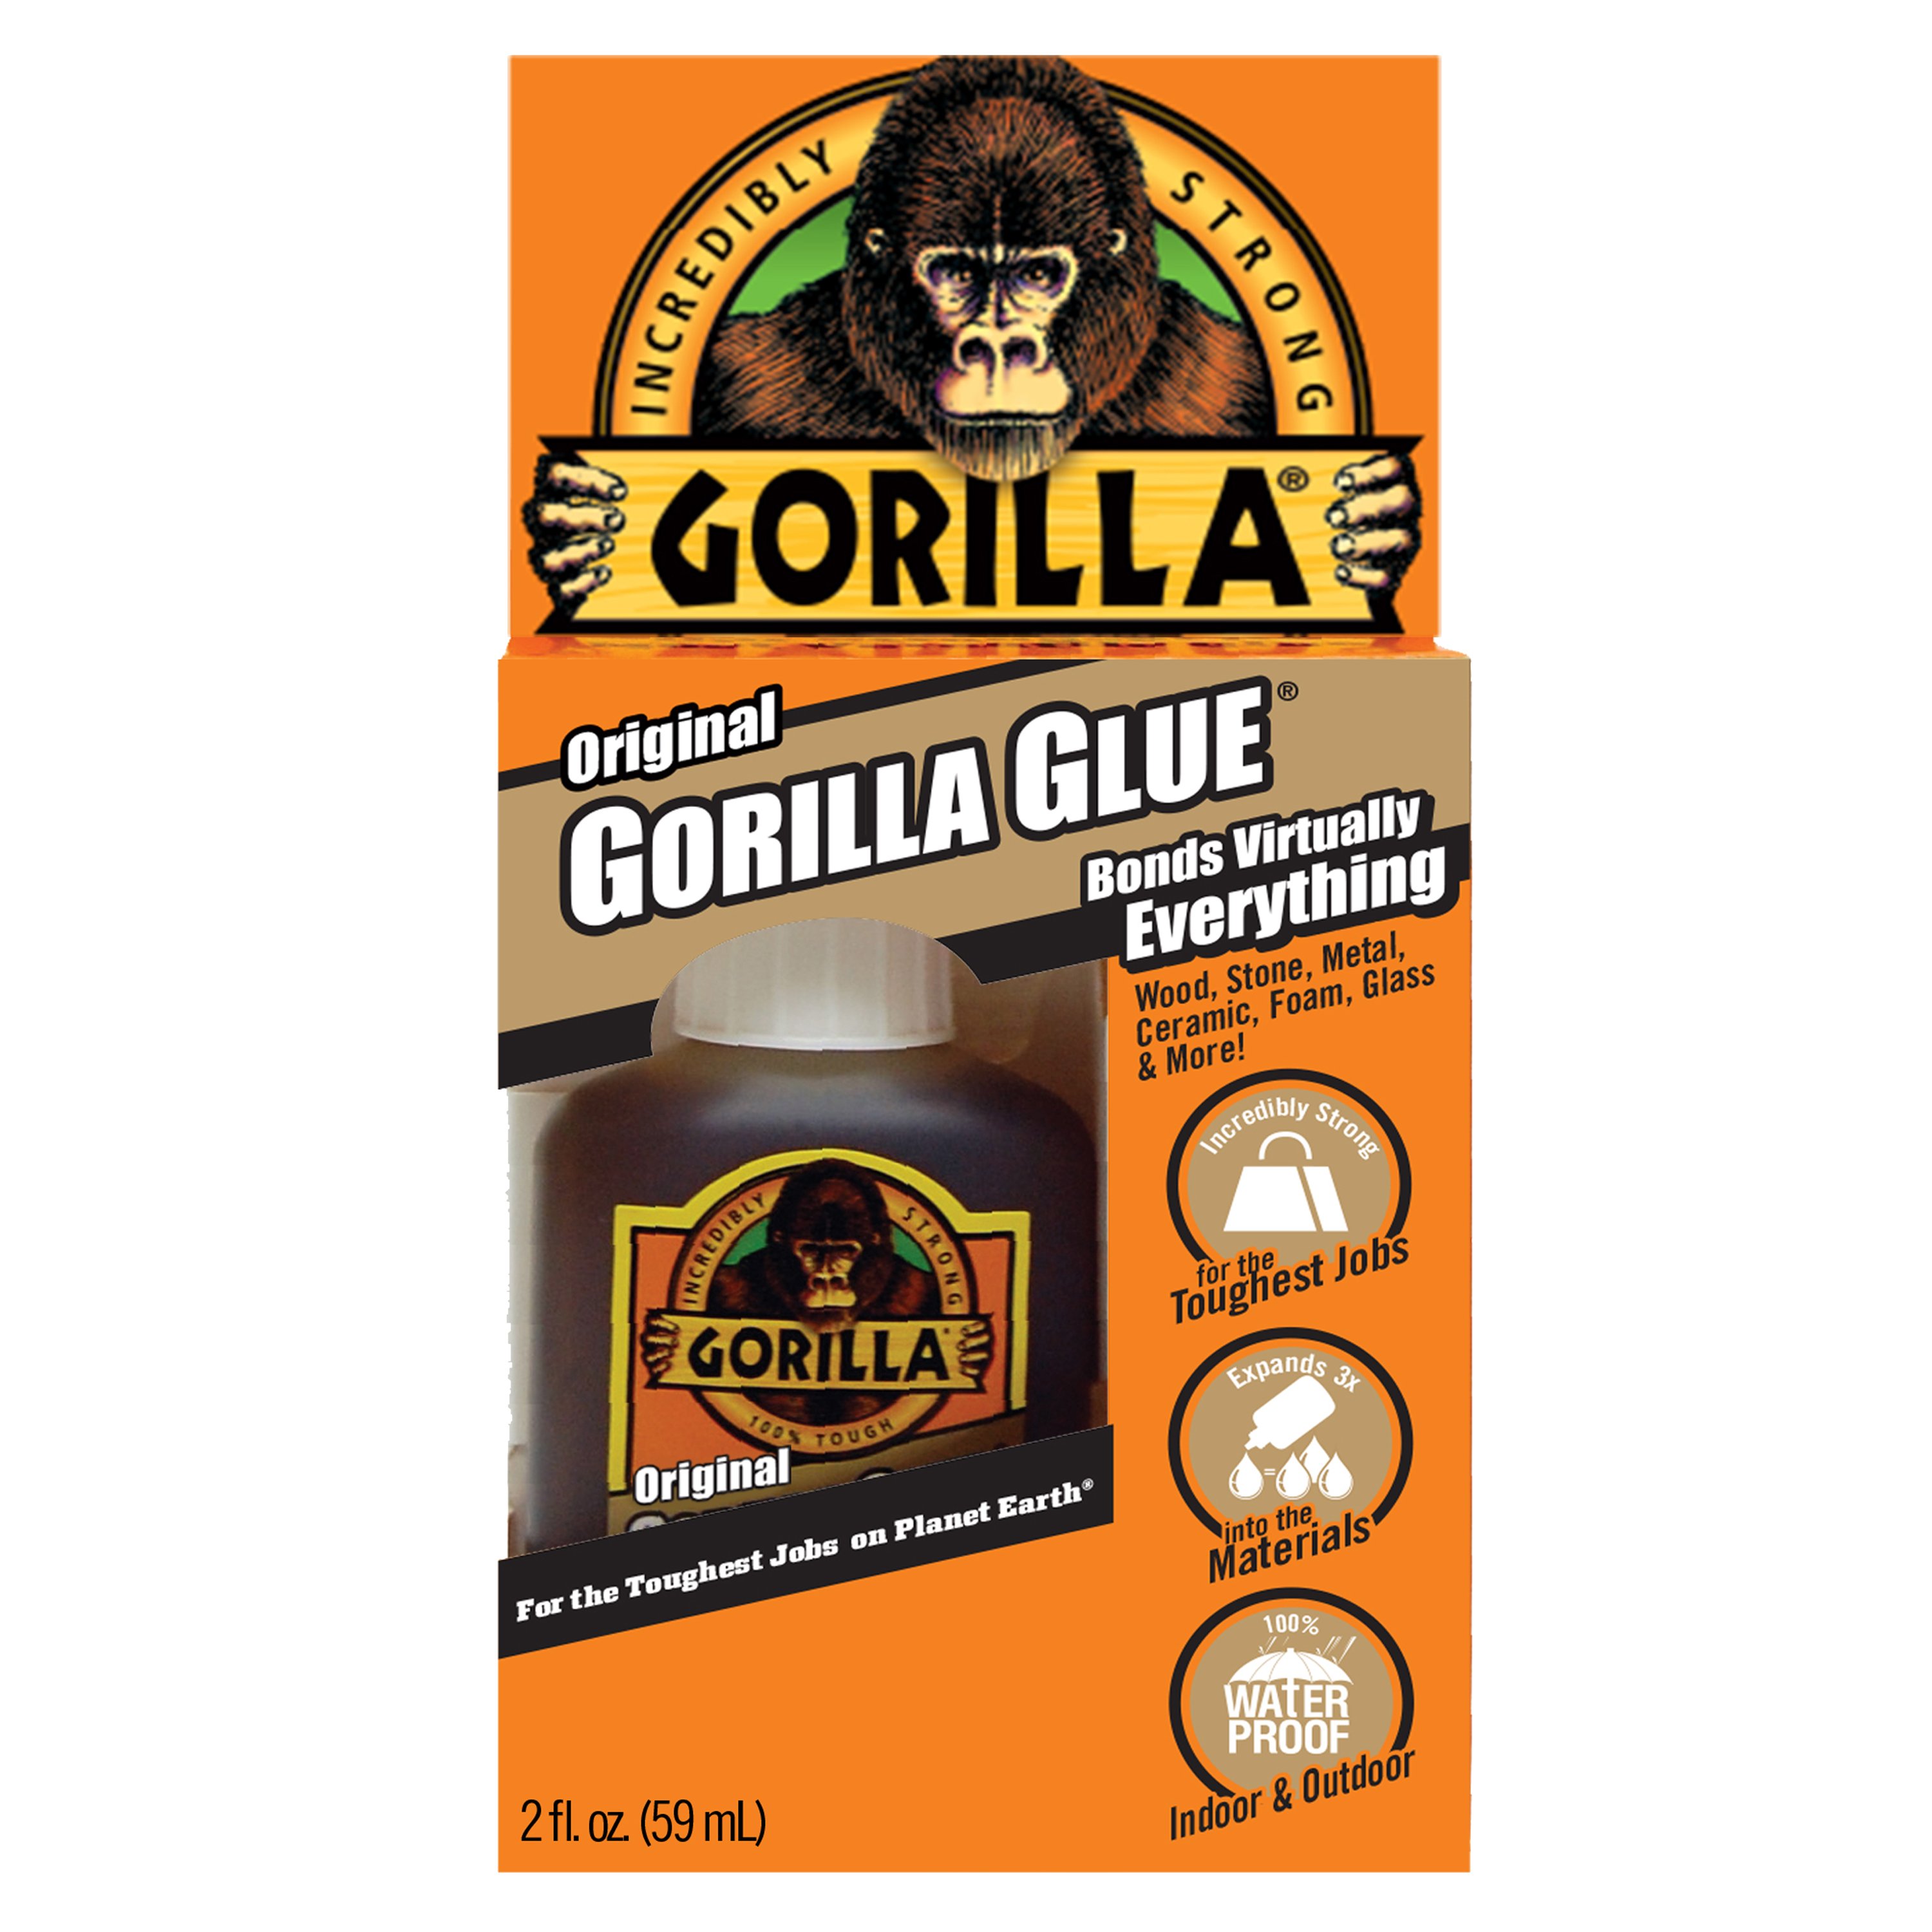 Gorilla Original High Strength Glue Shop Adhesives Tape At H E B